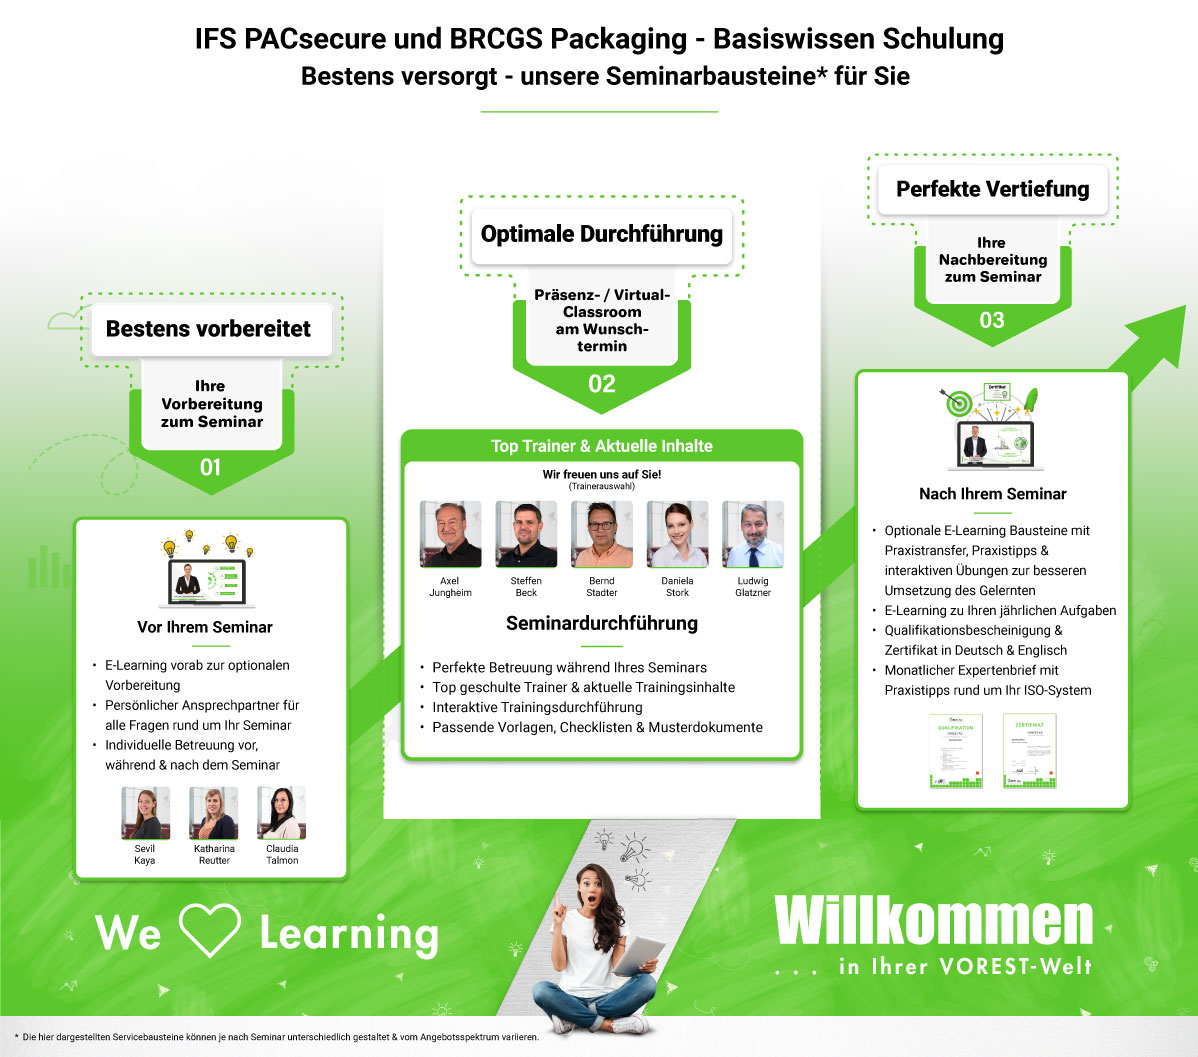 IFS PACsecure und BRCGS Packaging - Basiswissen Schulung